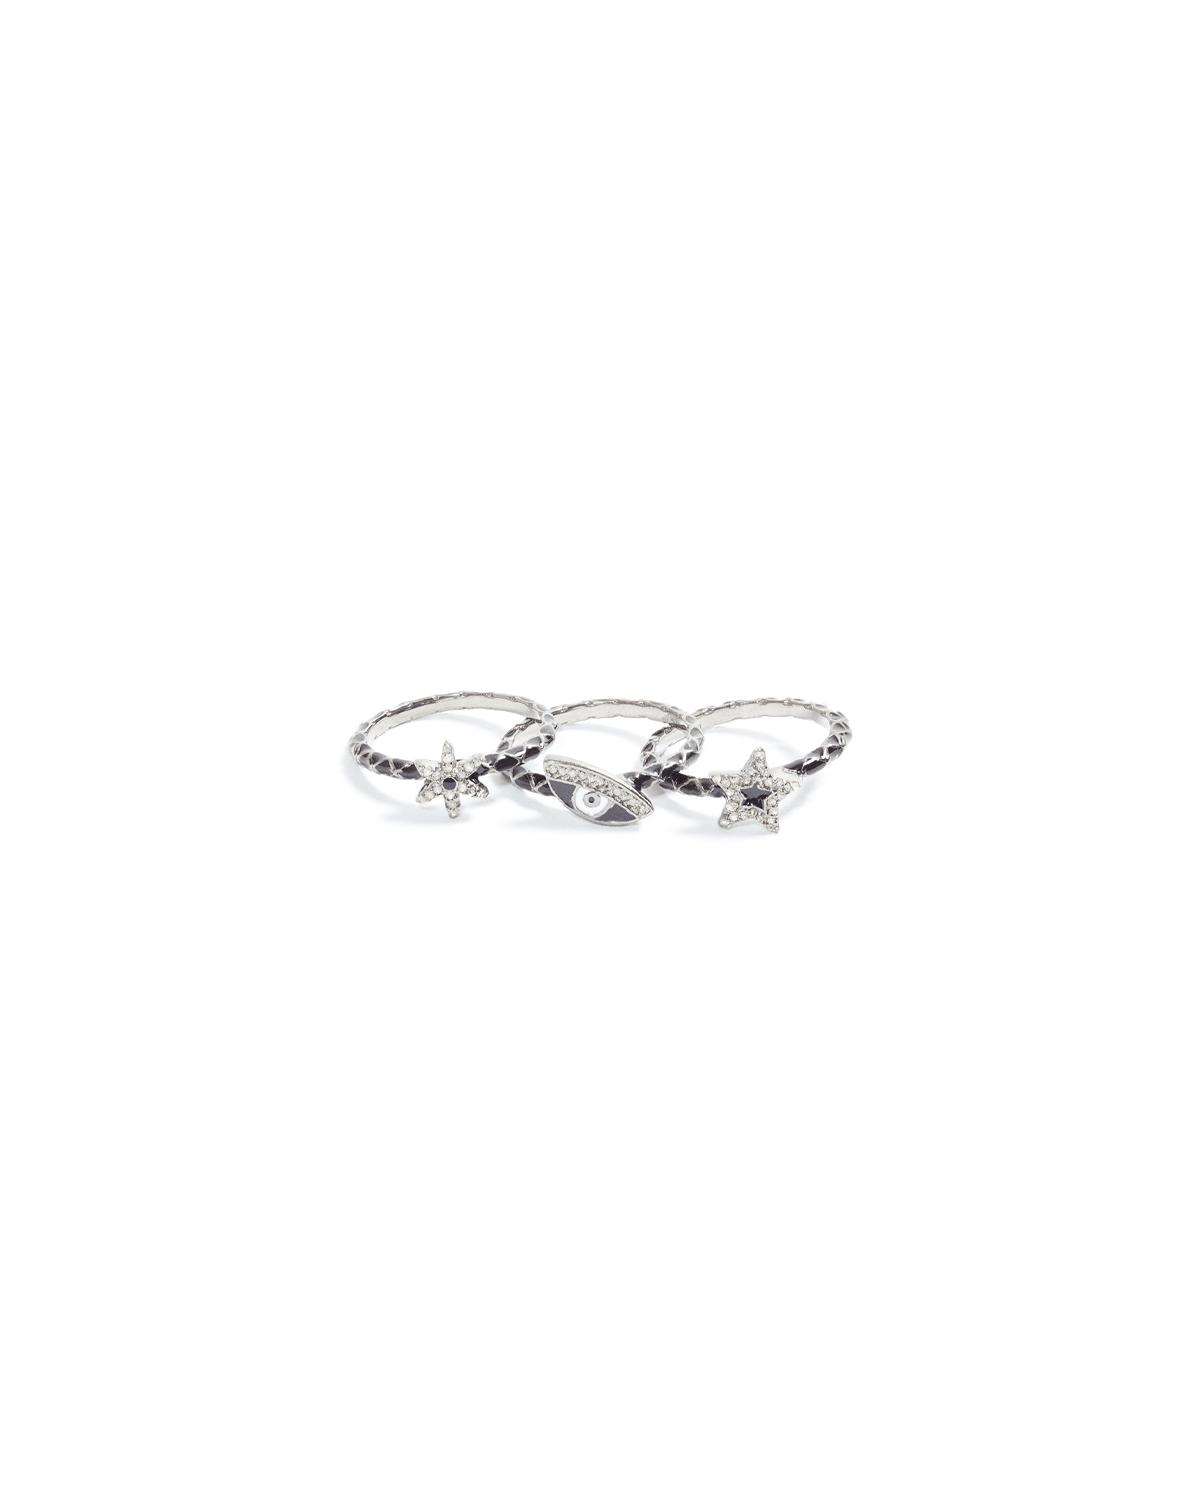 Mati Stack Black Enamel Diamond Rings, Set of 3, Size 8